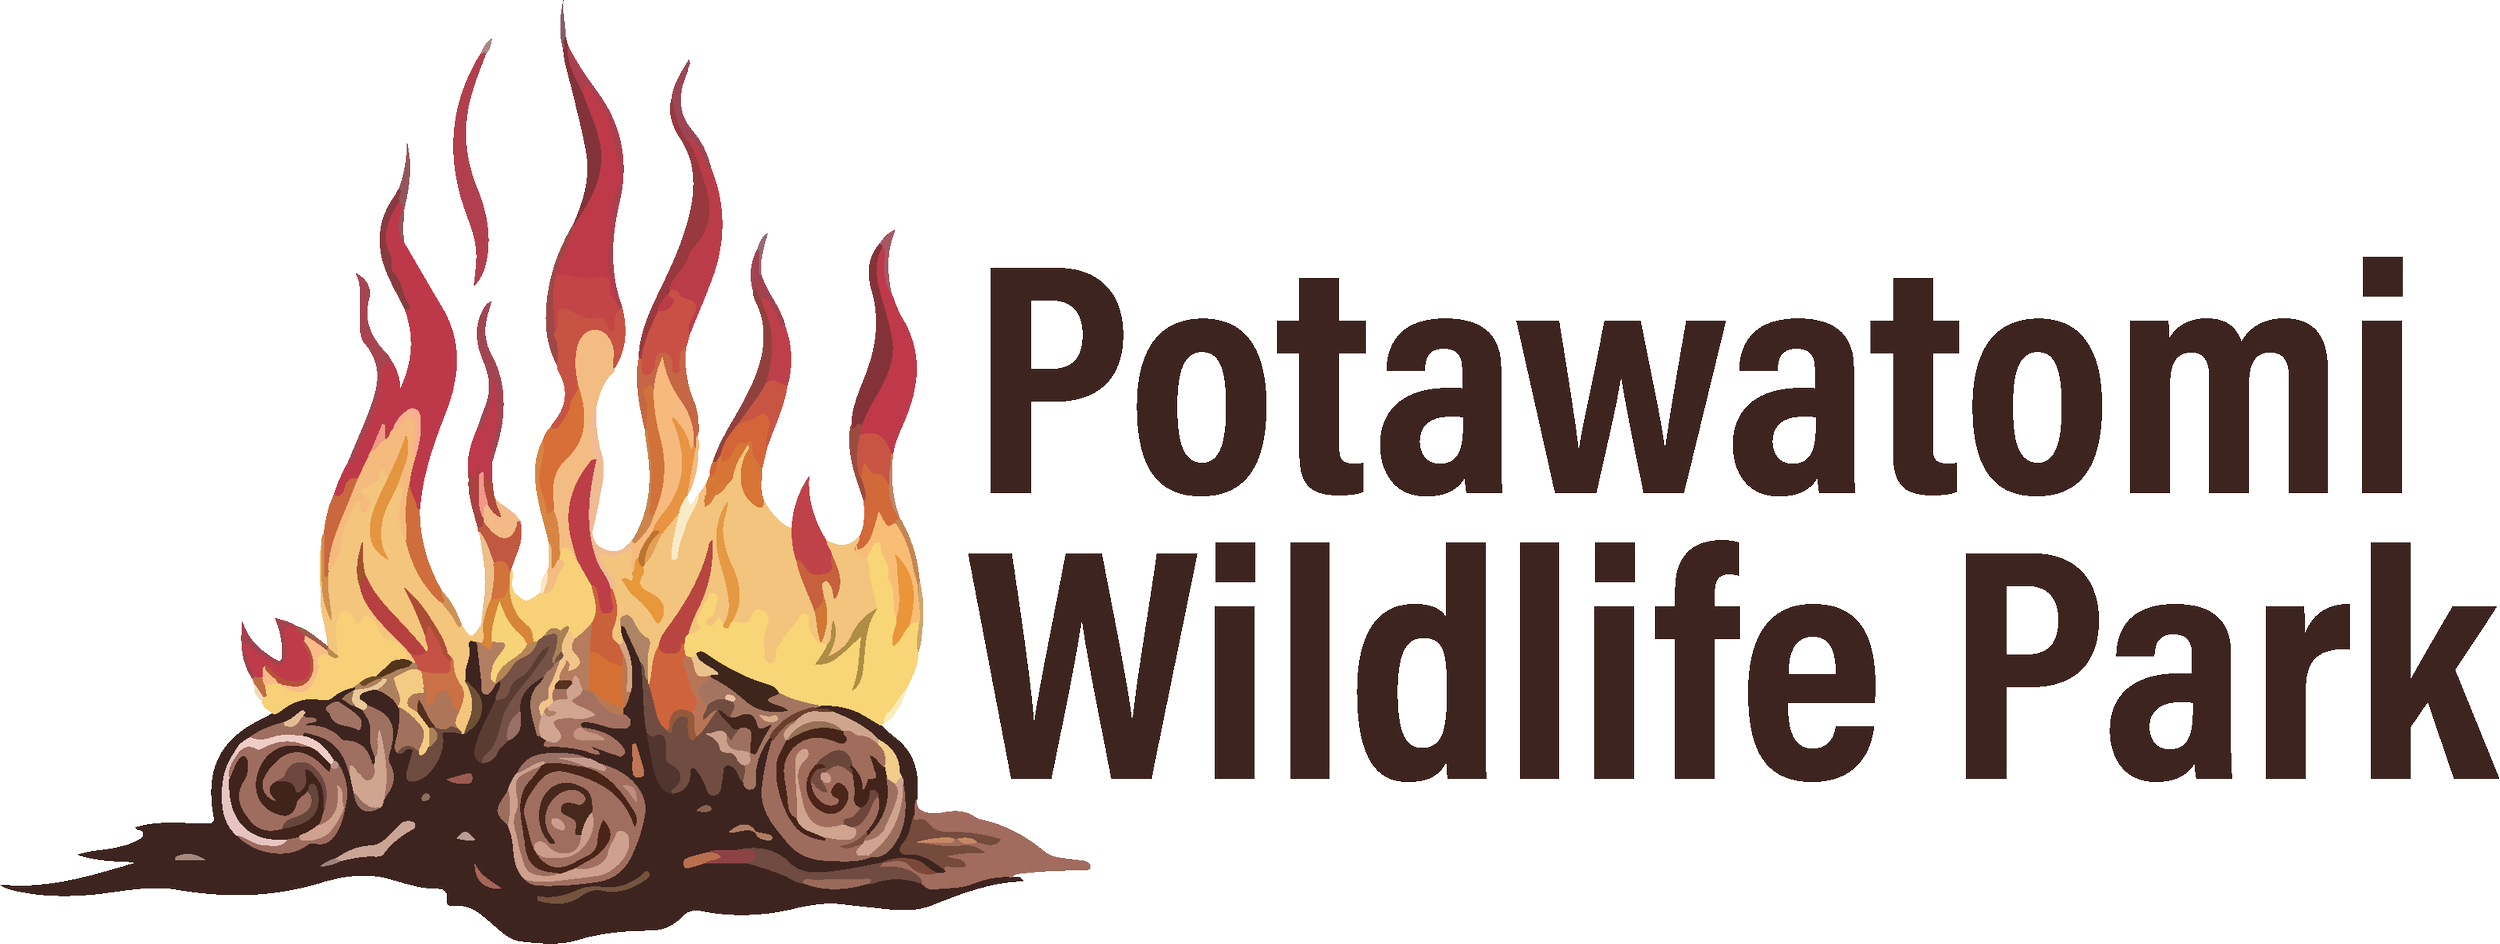 Pottawattomie Park Advisory Council